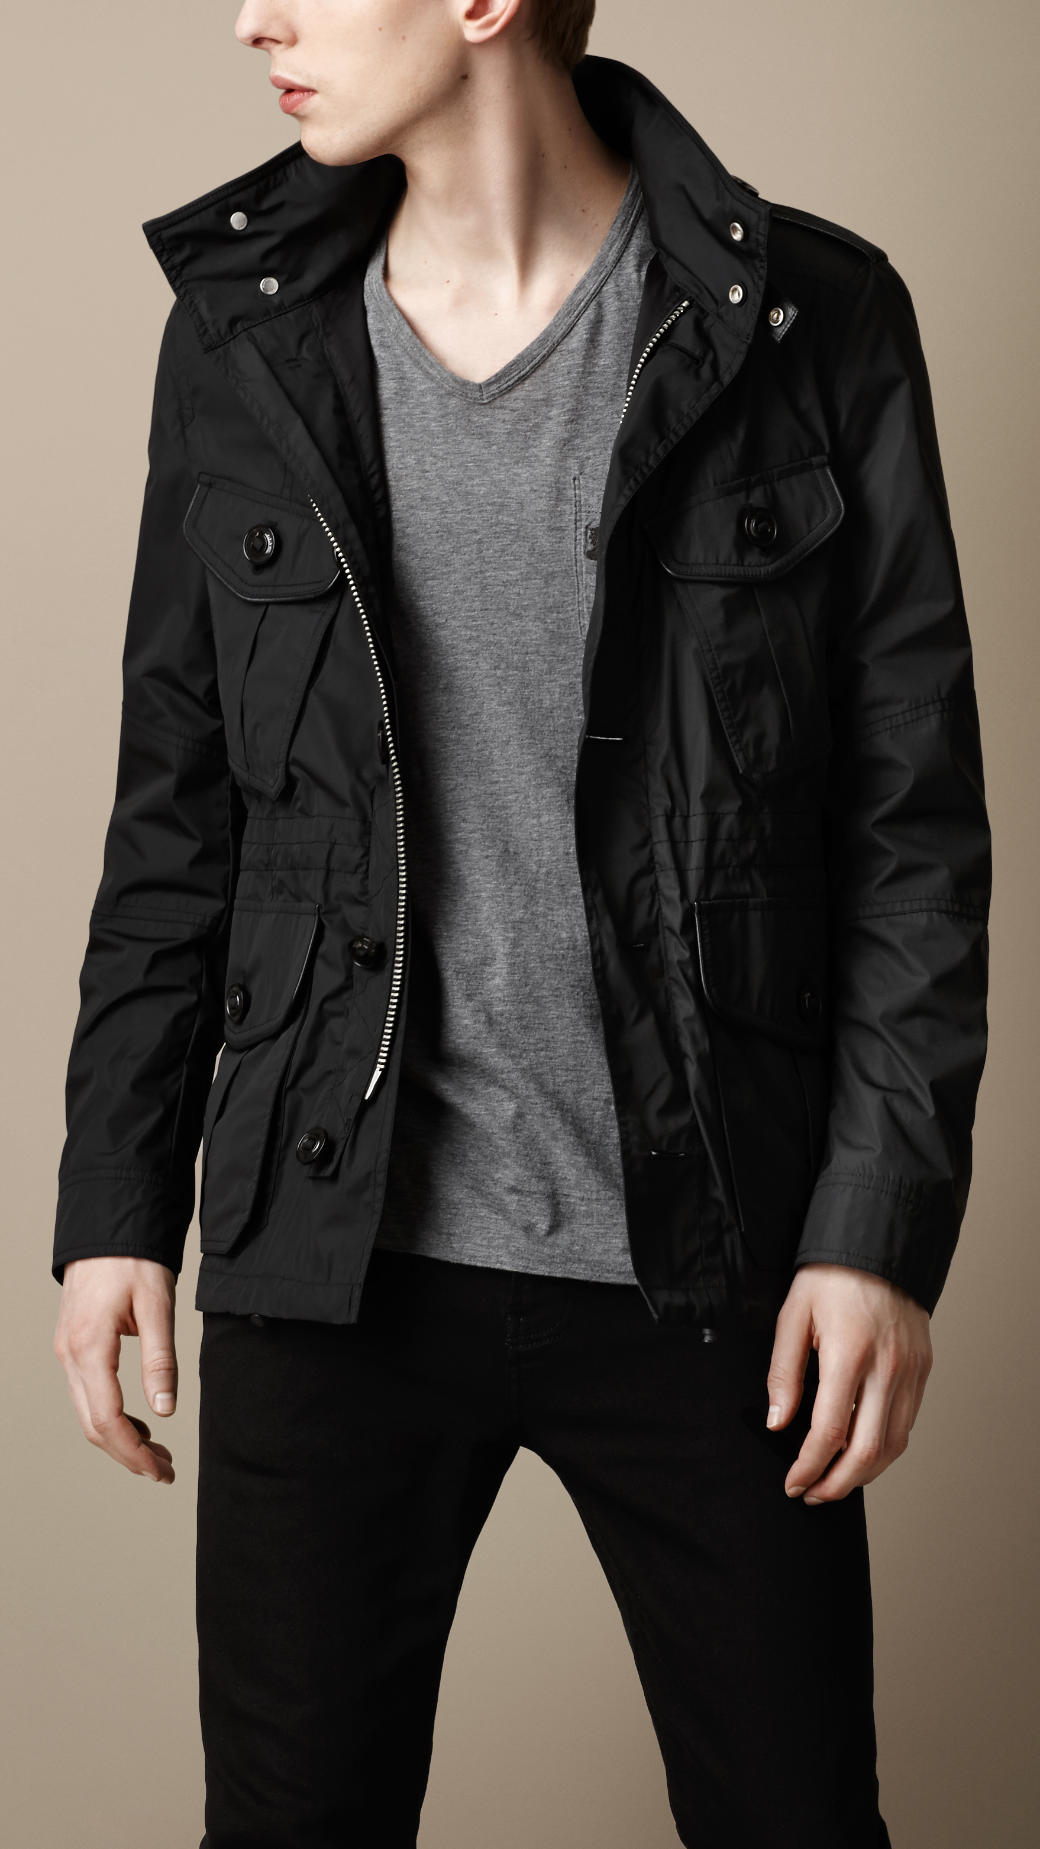 Mens light jacket black – Modern fashion jacket photo blog